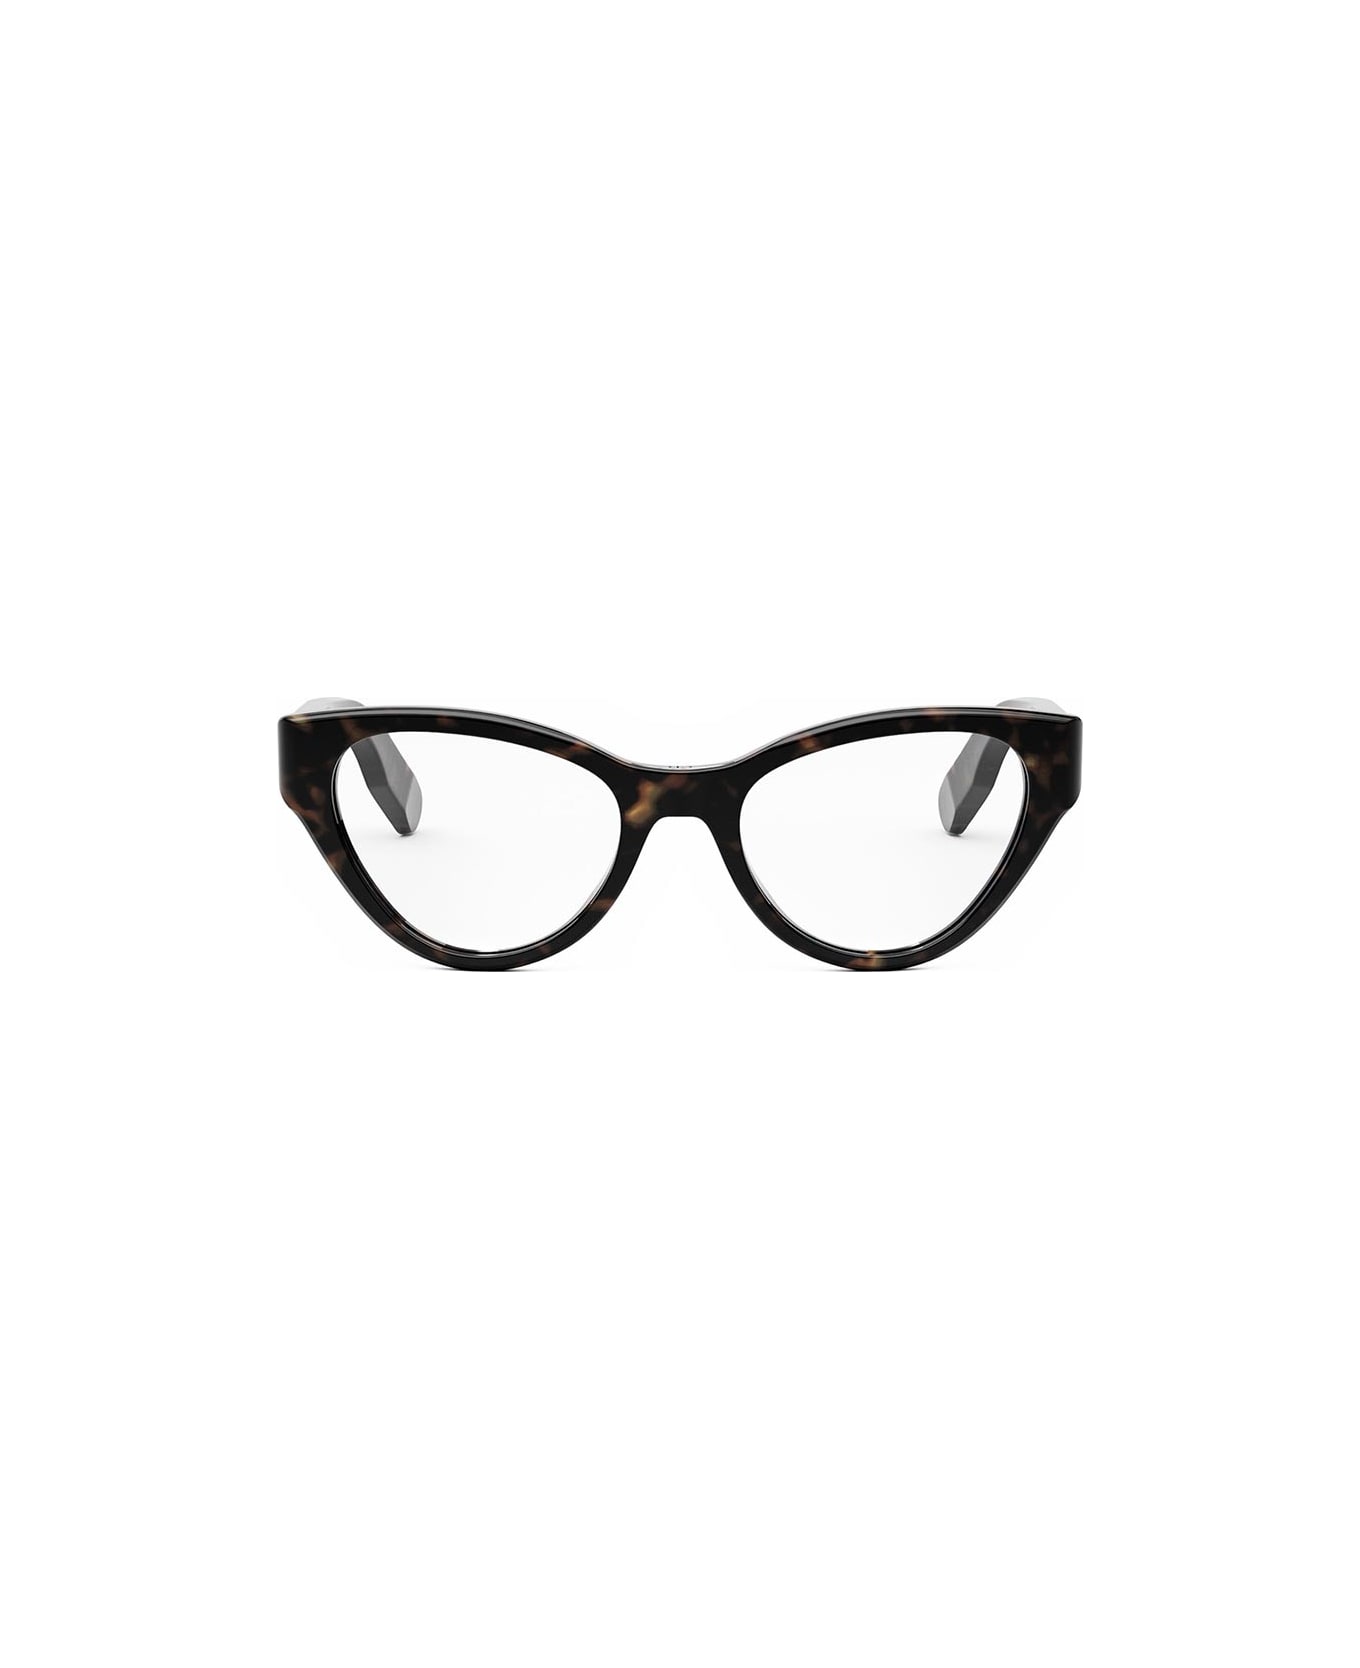 Dior Eyewear Glasses - Havana